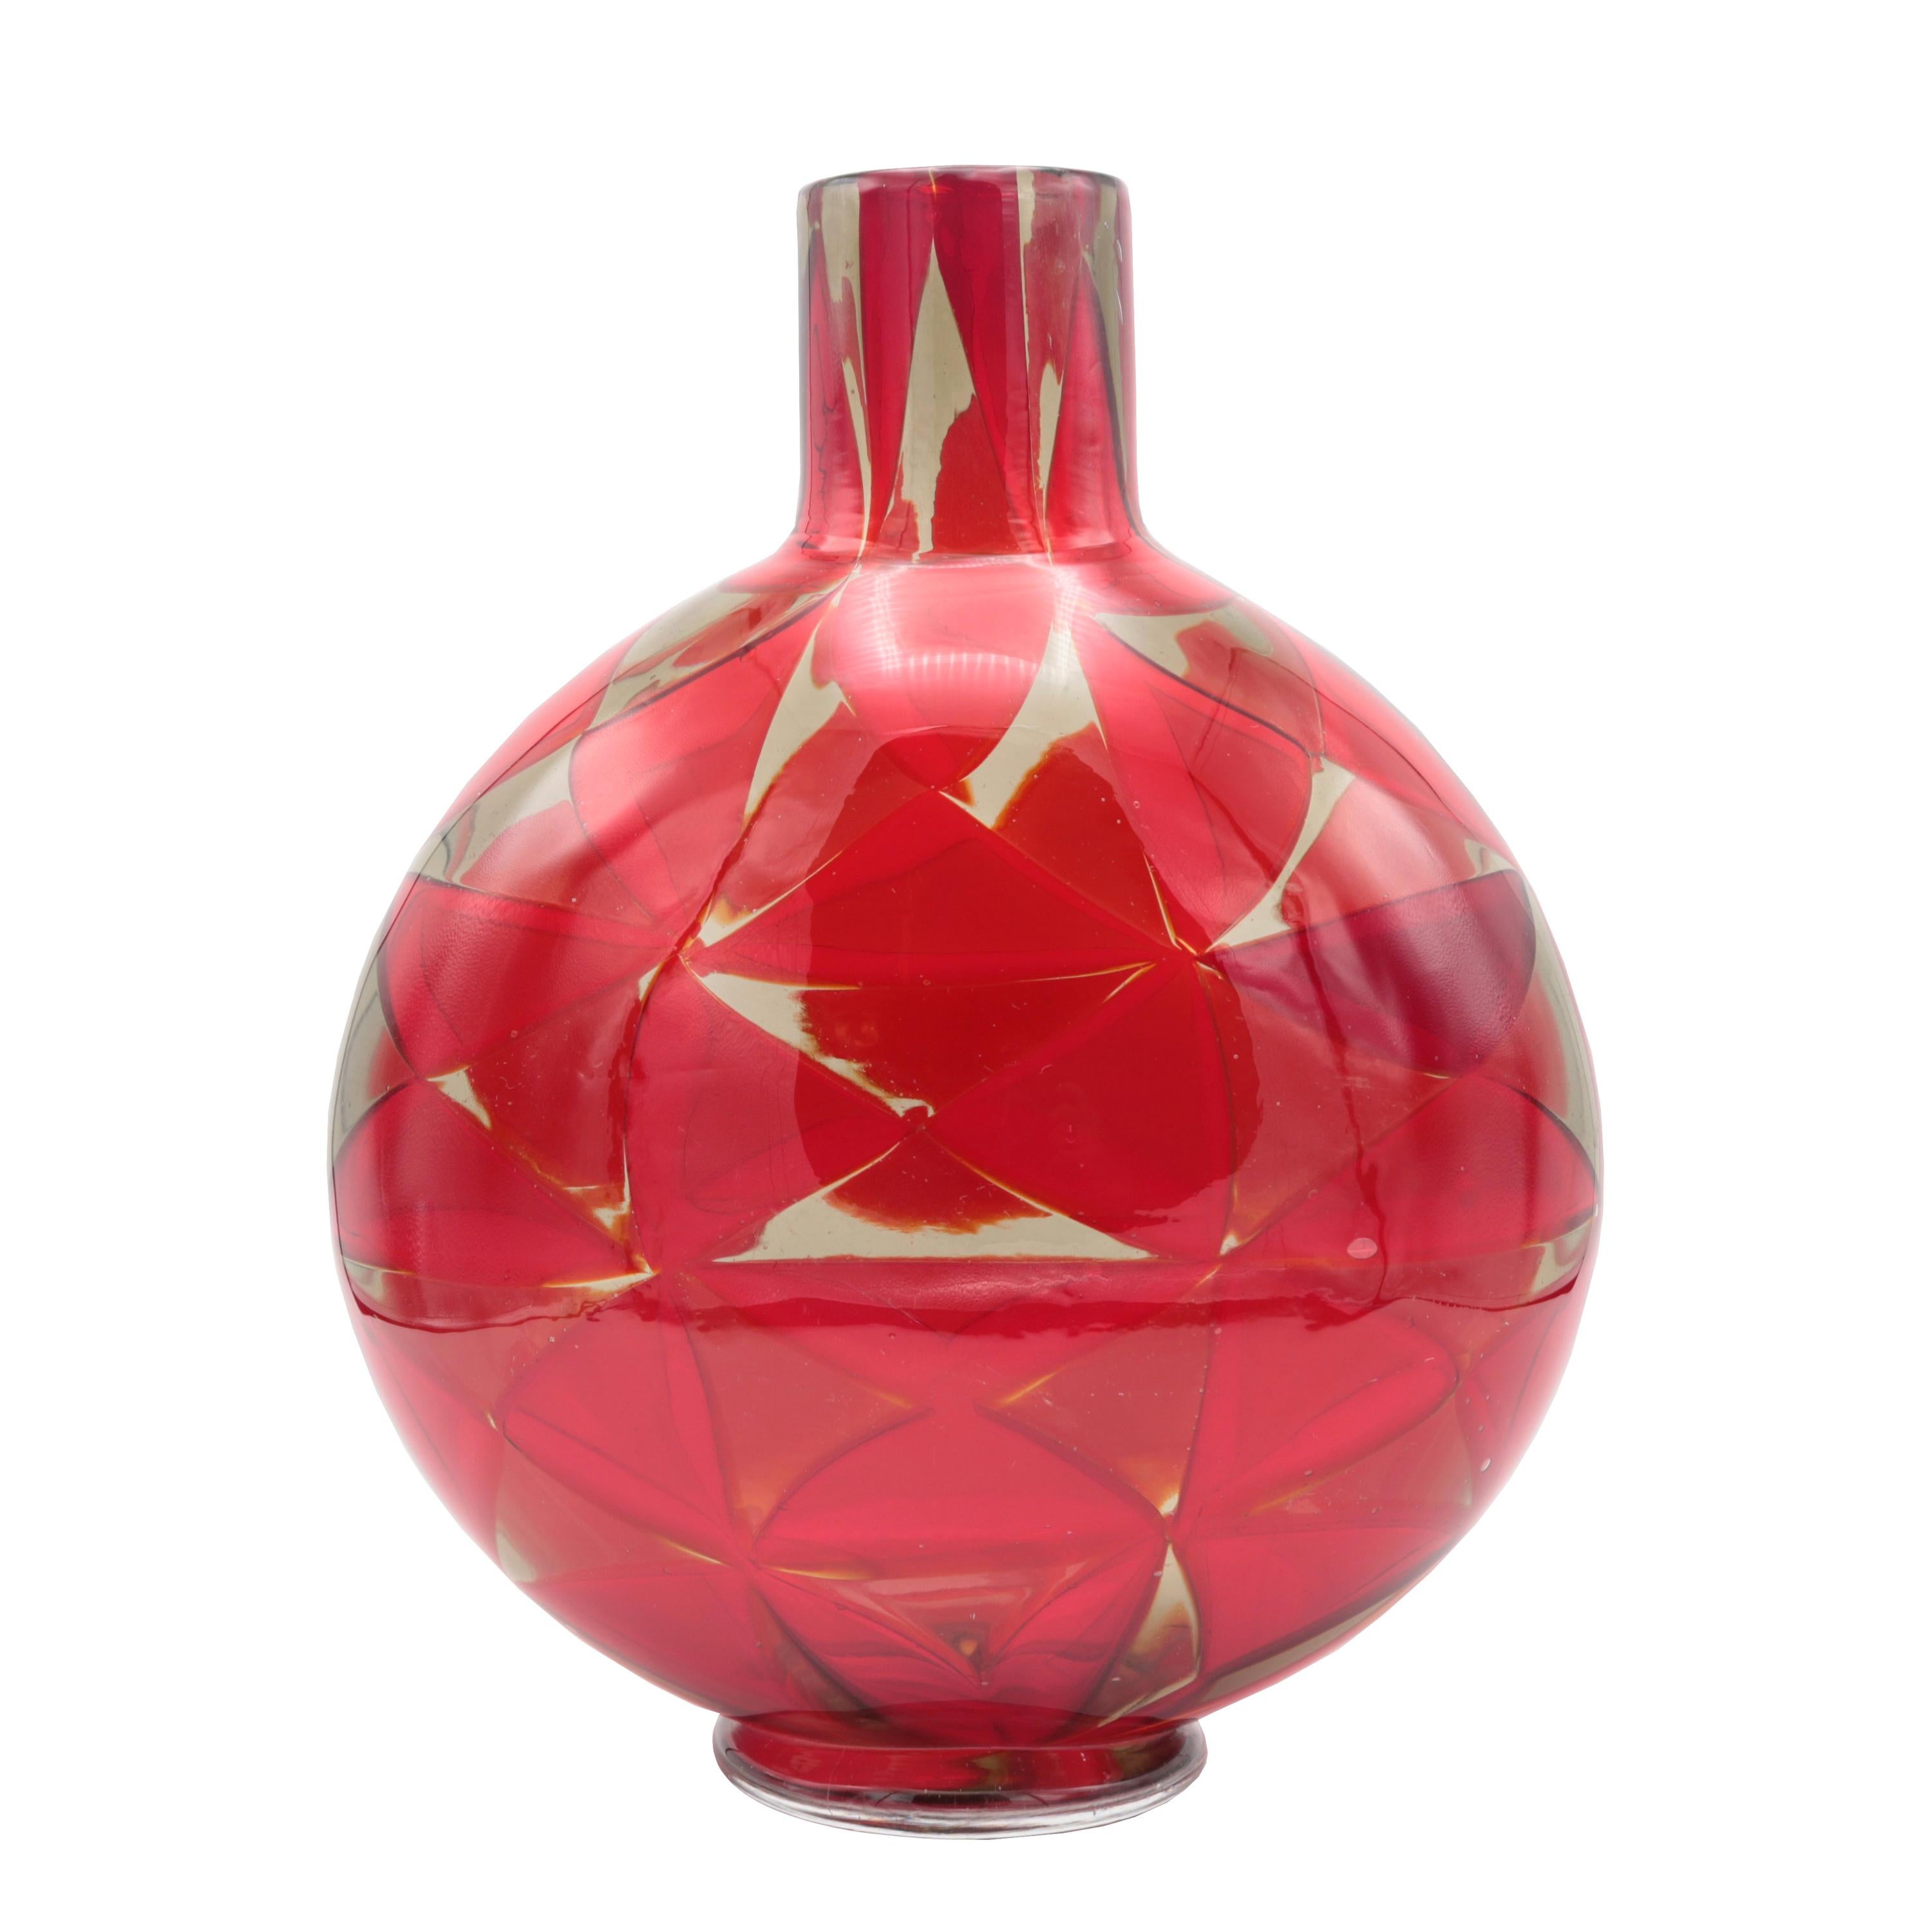 "Intariso" Art Glass Vase by Ercole Barovier